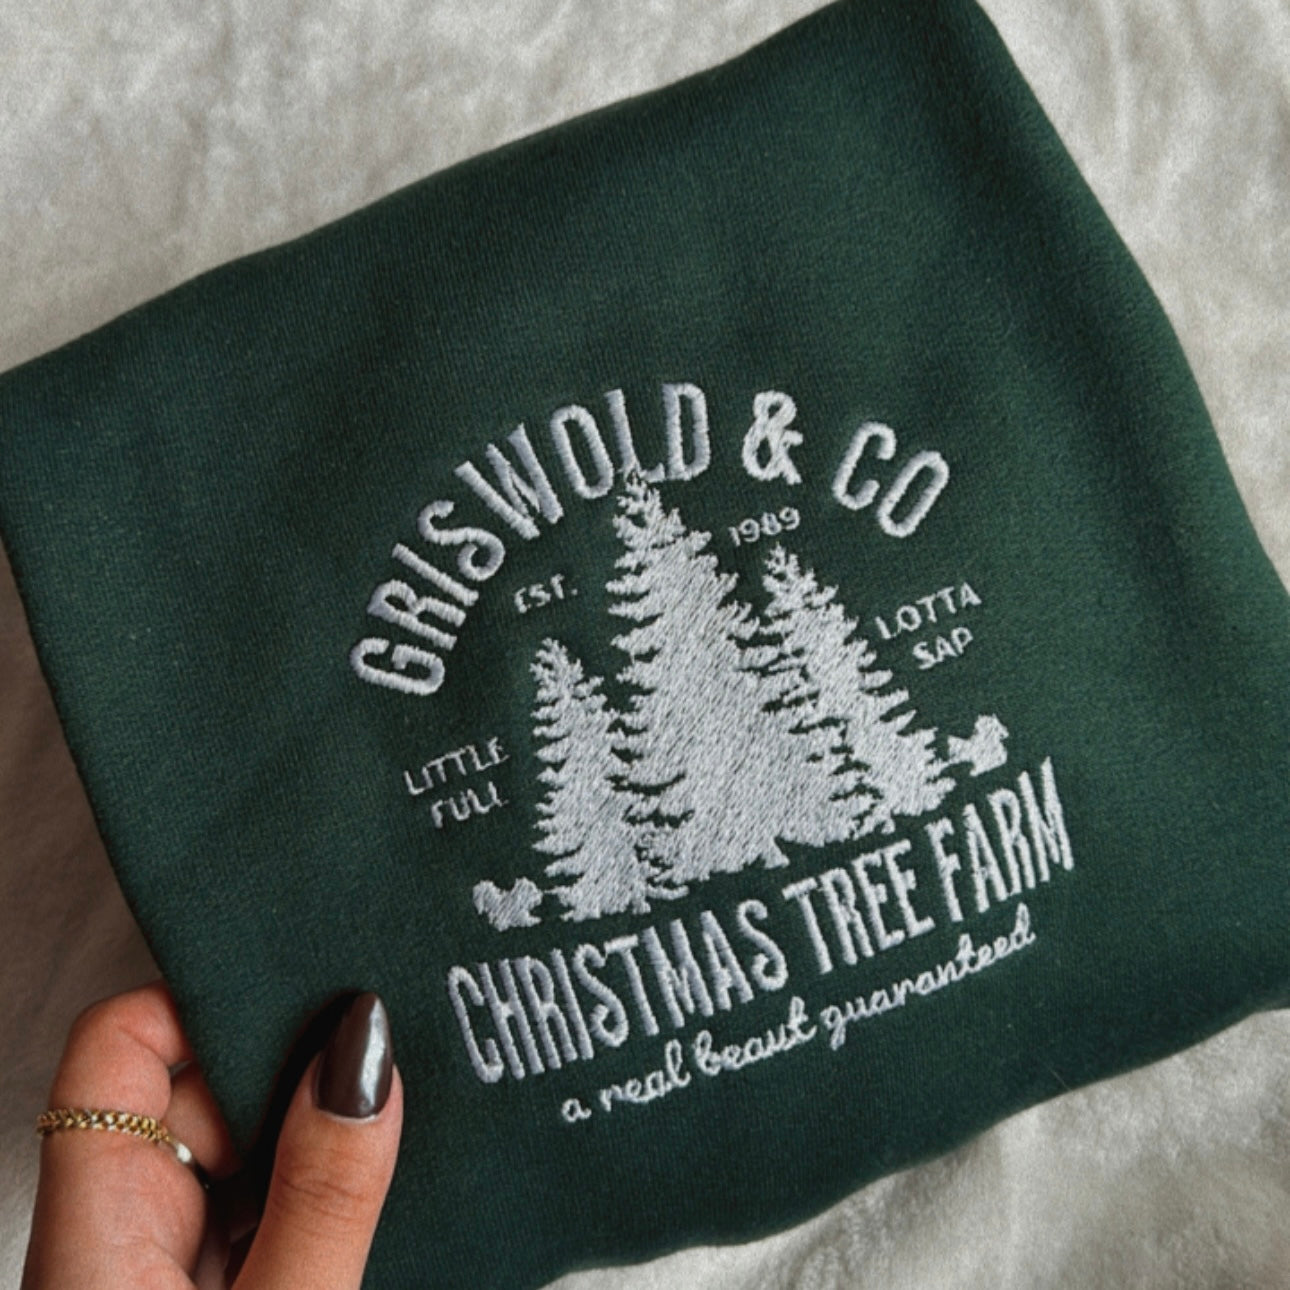 Griswold Tree Farm Crewneck